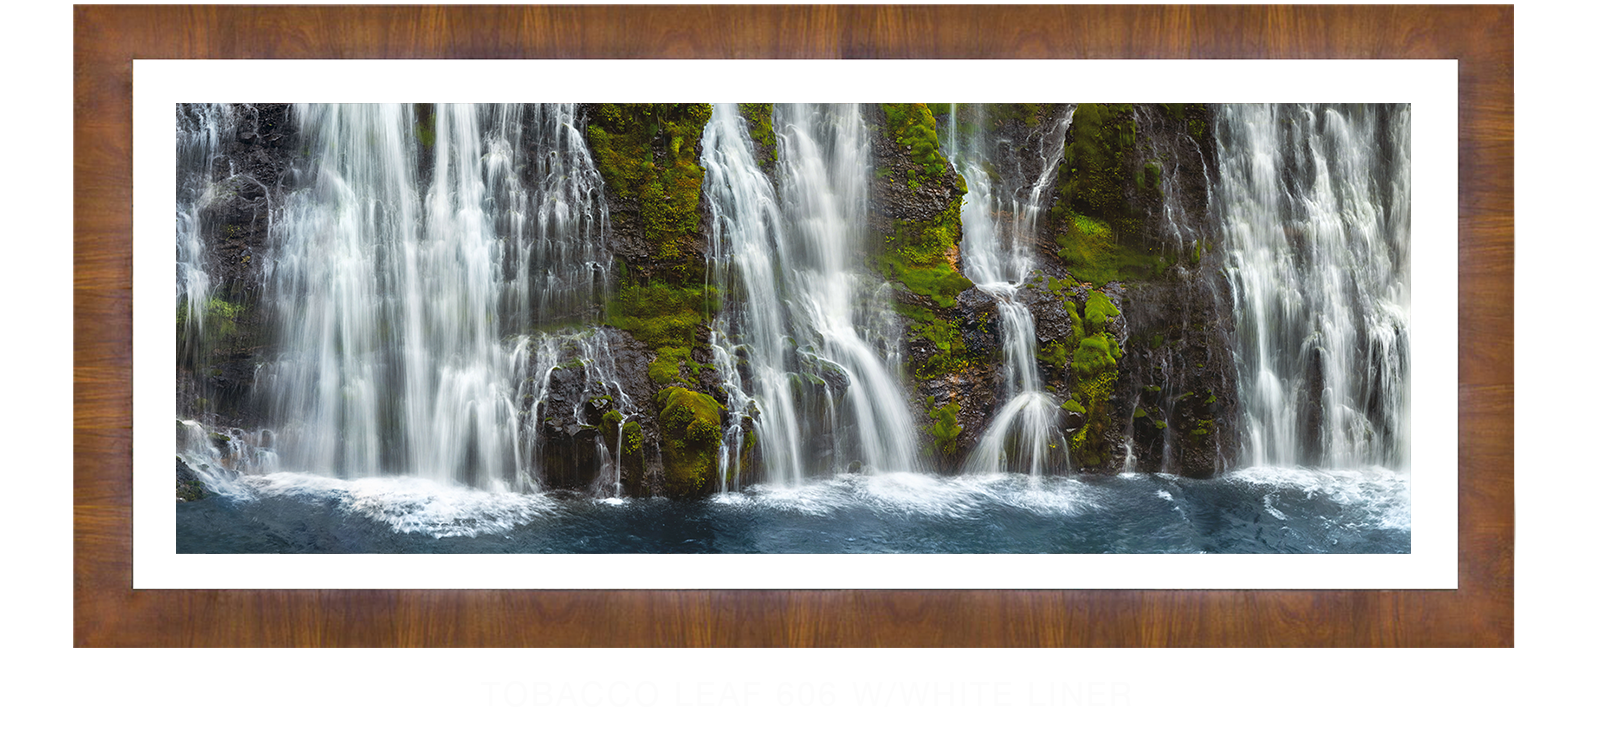 24_ Tobacco Leaf 606 w_Wht Liner